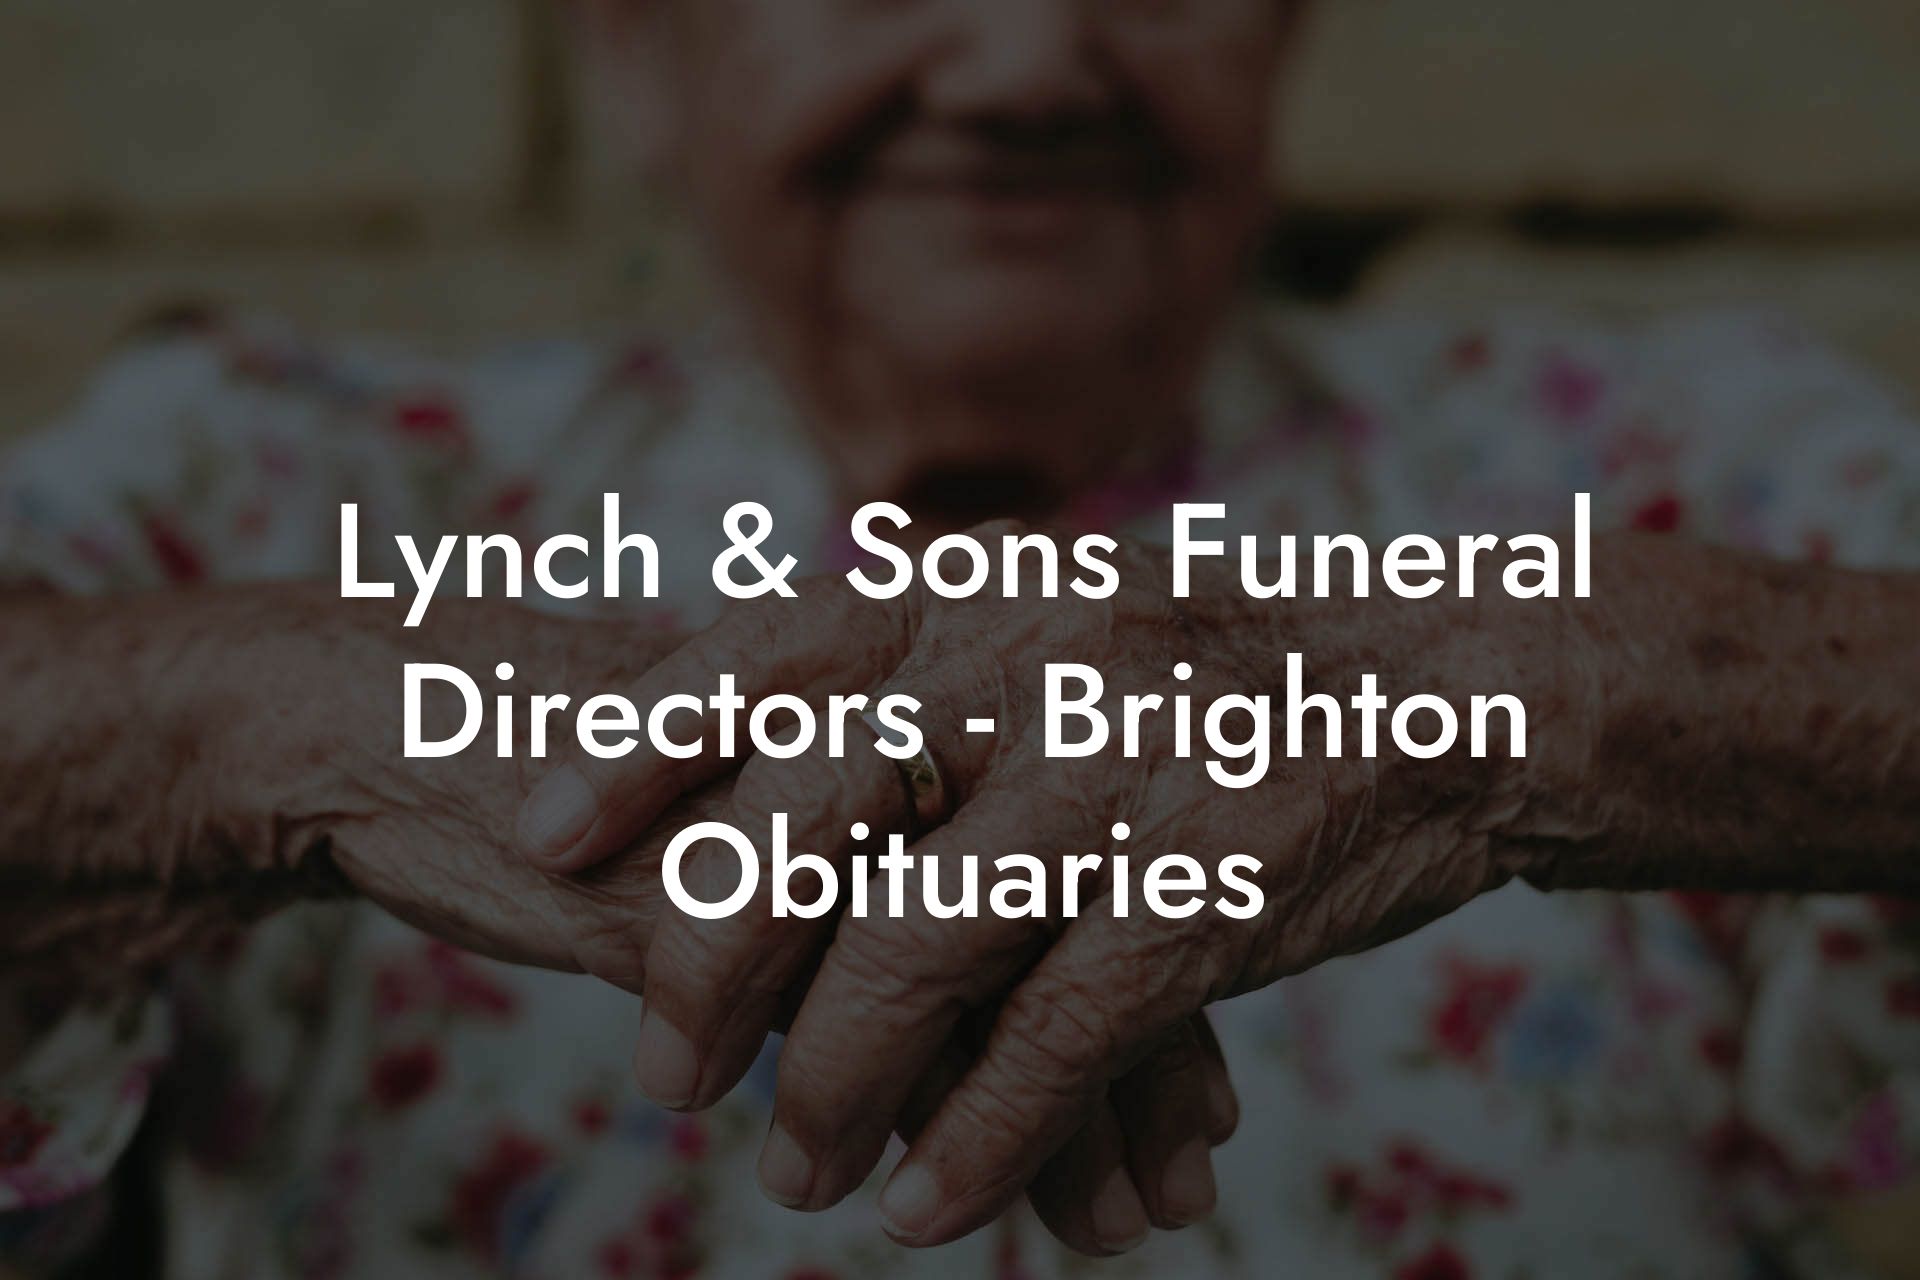 Lynch & Sons Funeral Directors - Brighton Obituaries